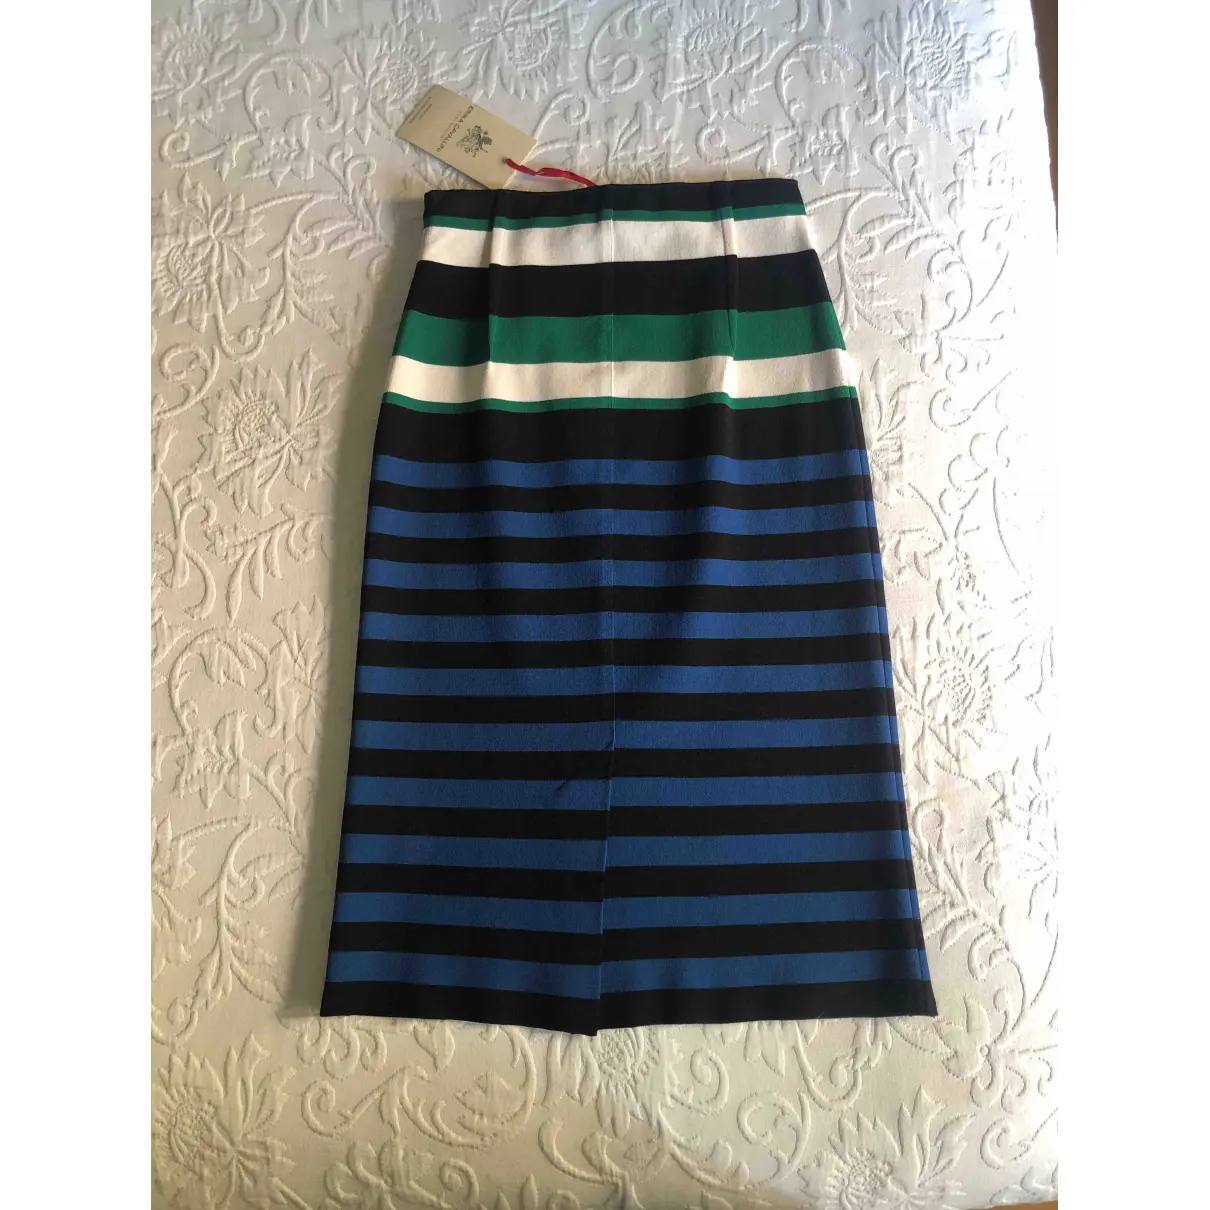 Buy Erika Cavallini Skirt online